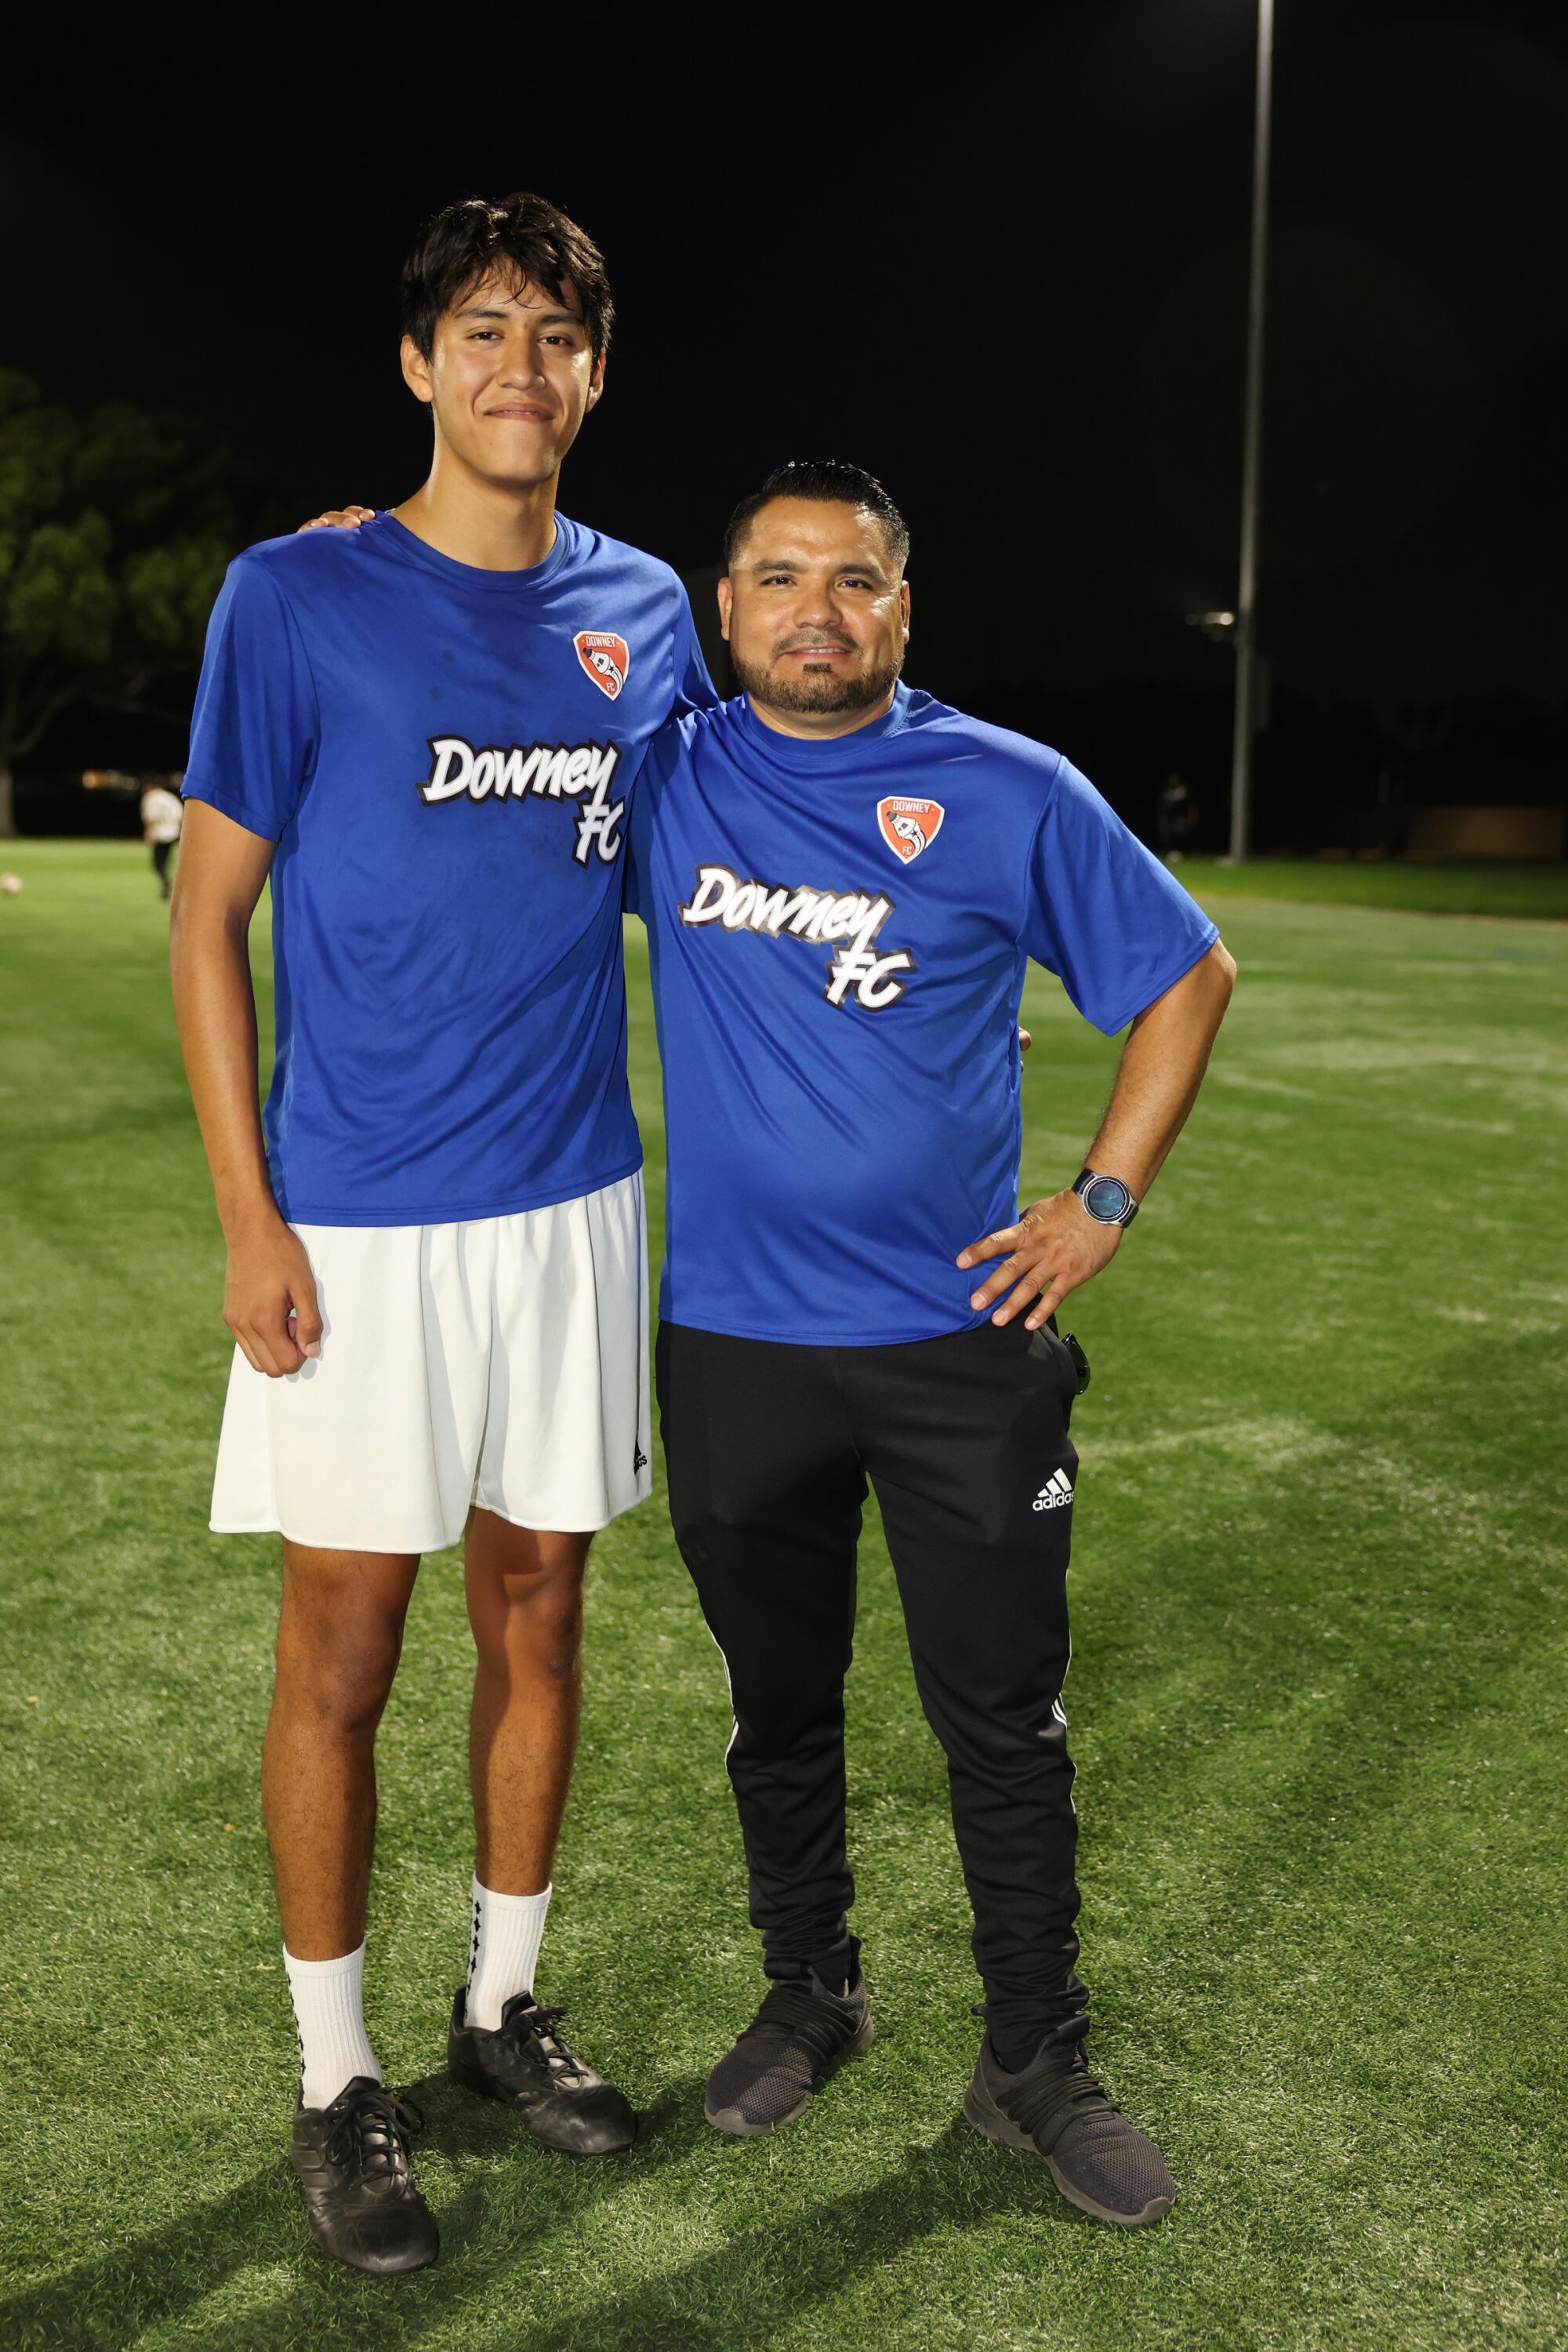 Daniel Castillo with his coach for team Downey FC.